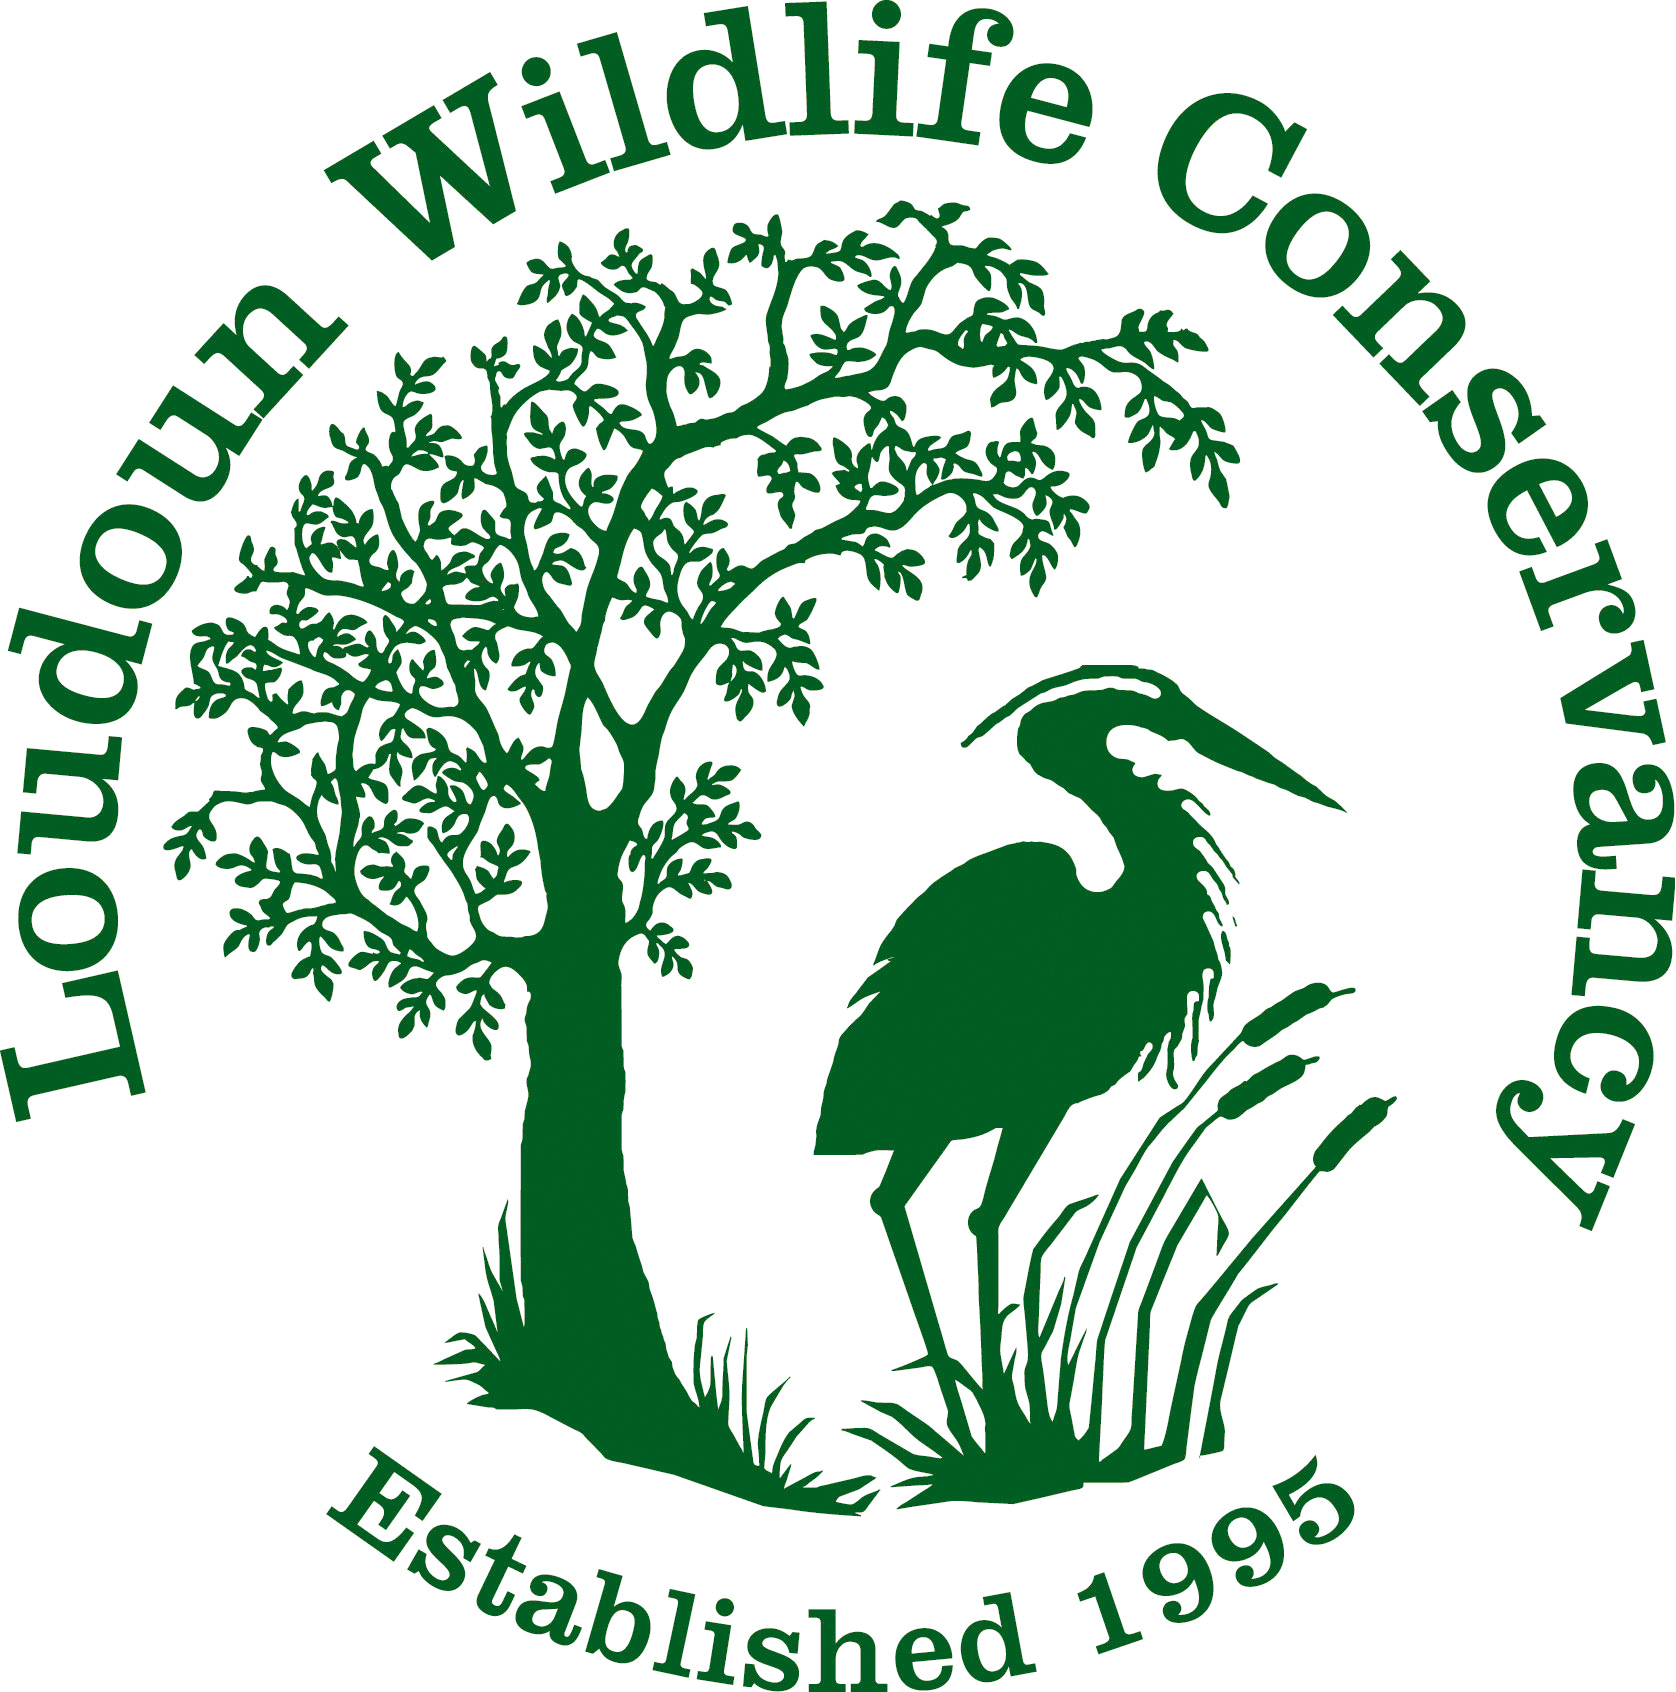 Loudoun Wildlife Conservancy